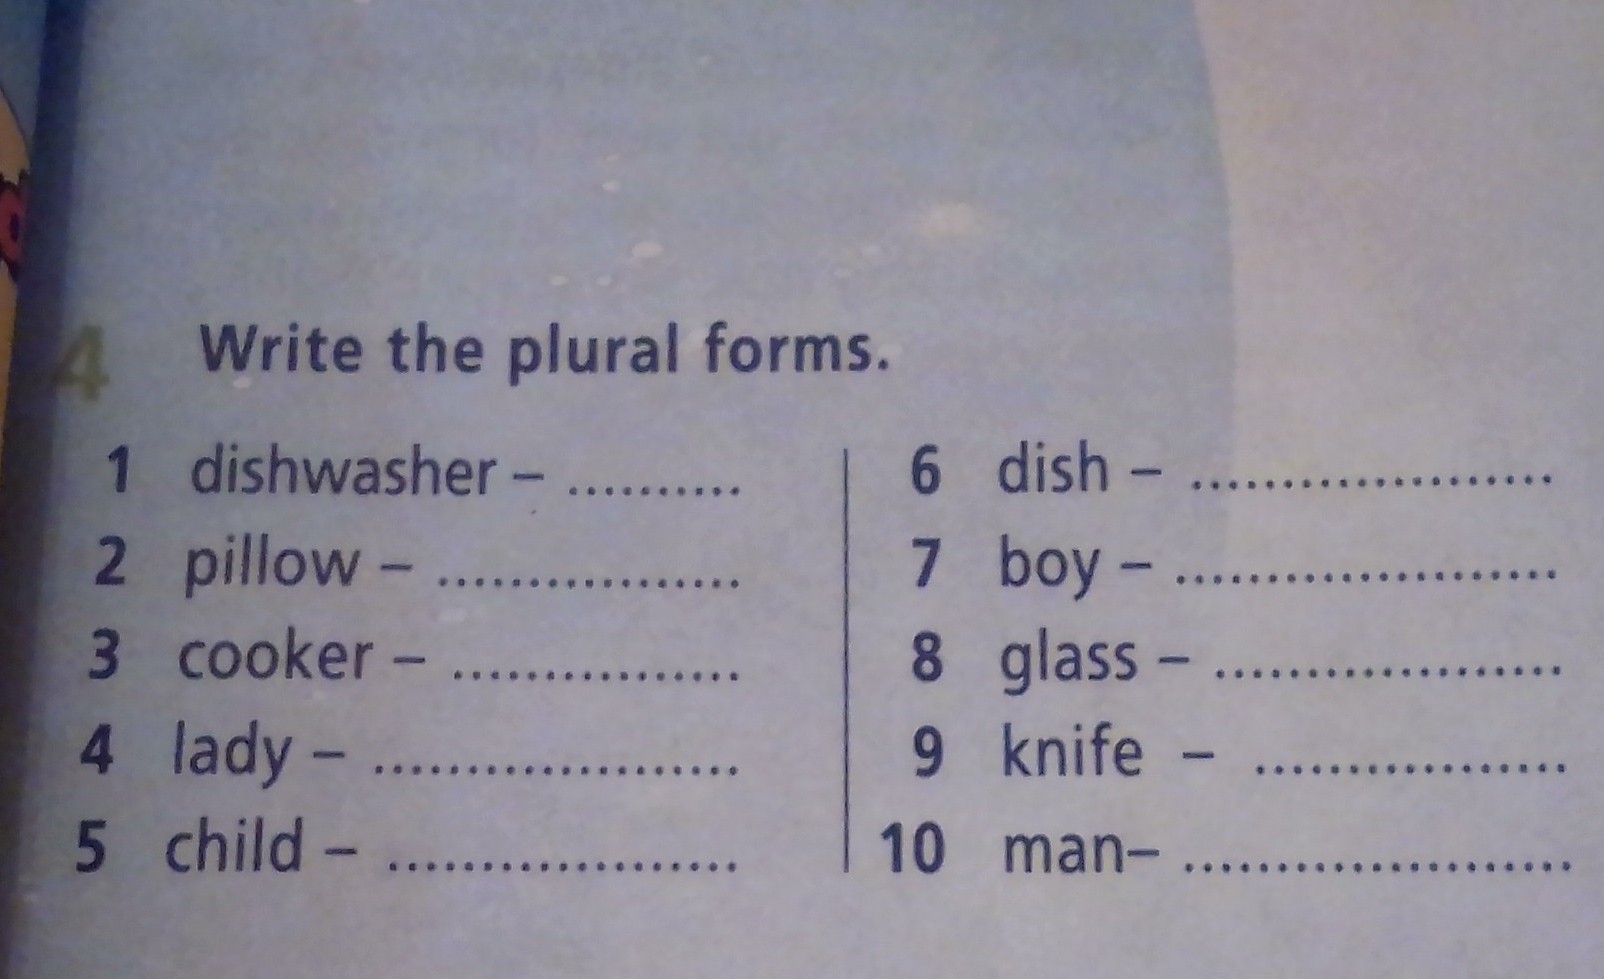 Write the plurals baby glass shelf. Write the plurals. Write the plural forms. Write the plurals 5 класс. Write the plural ответ.